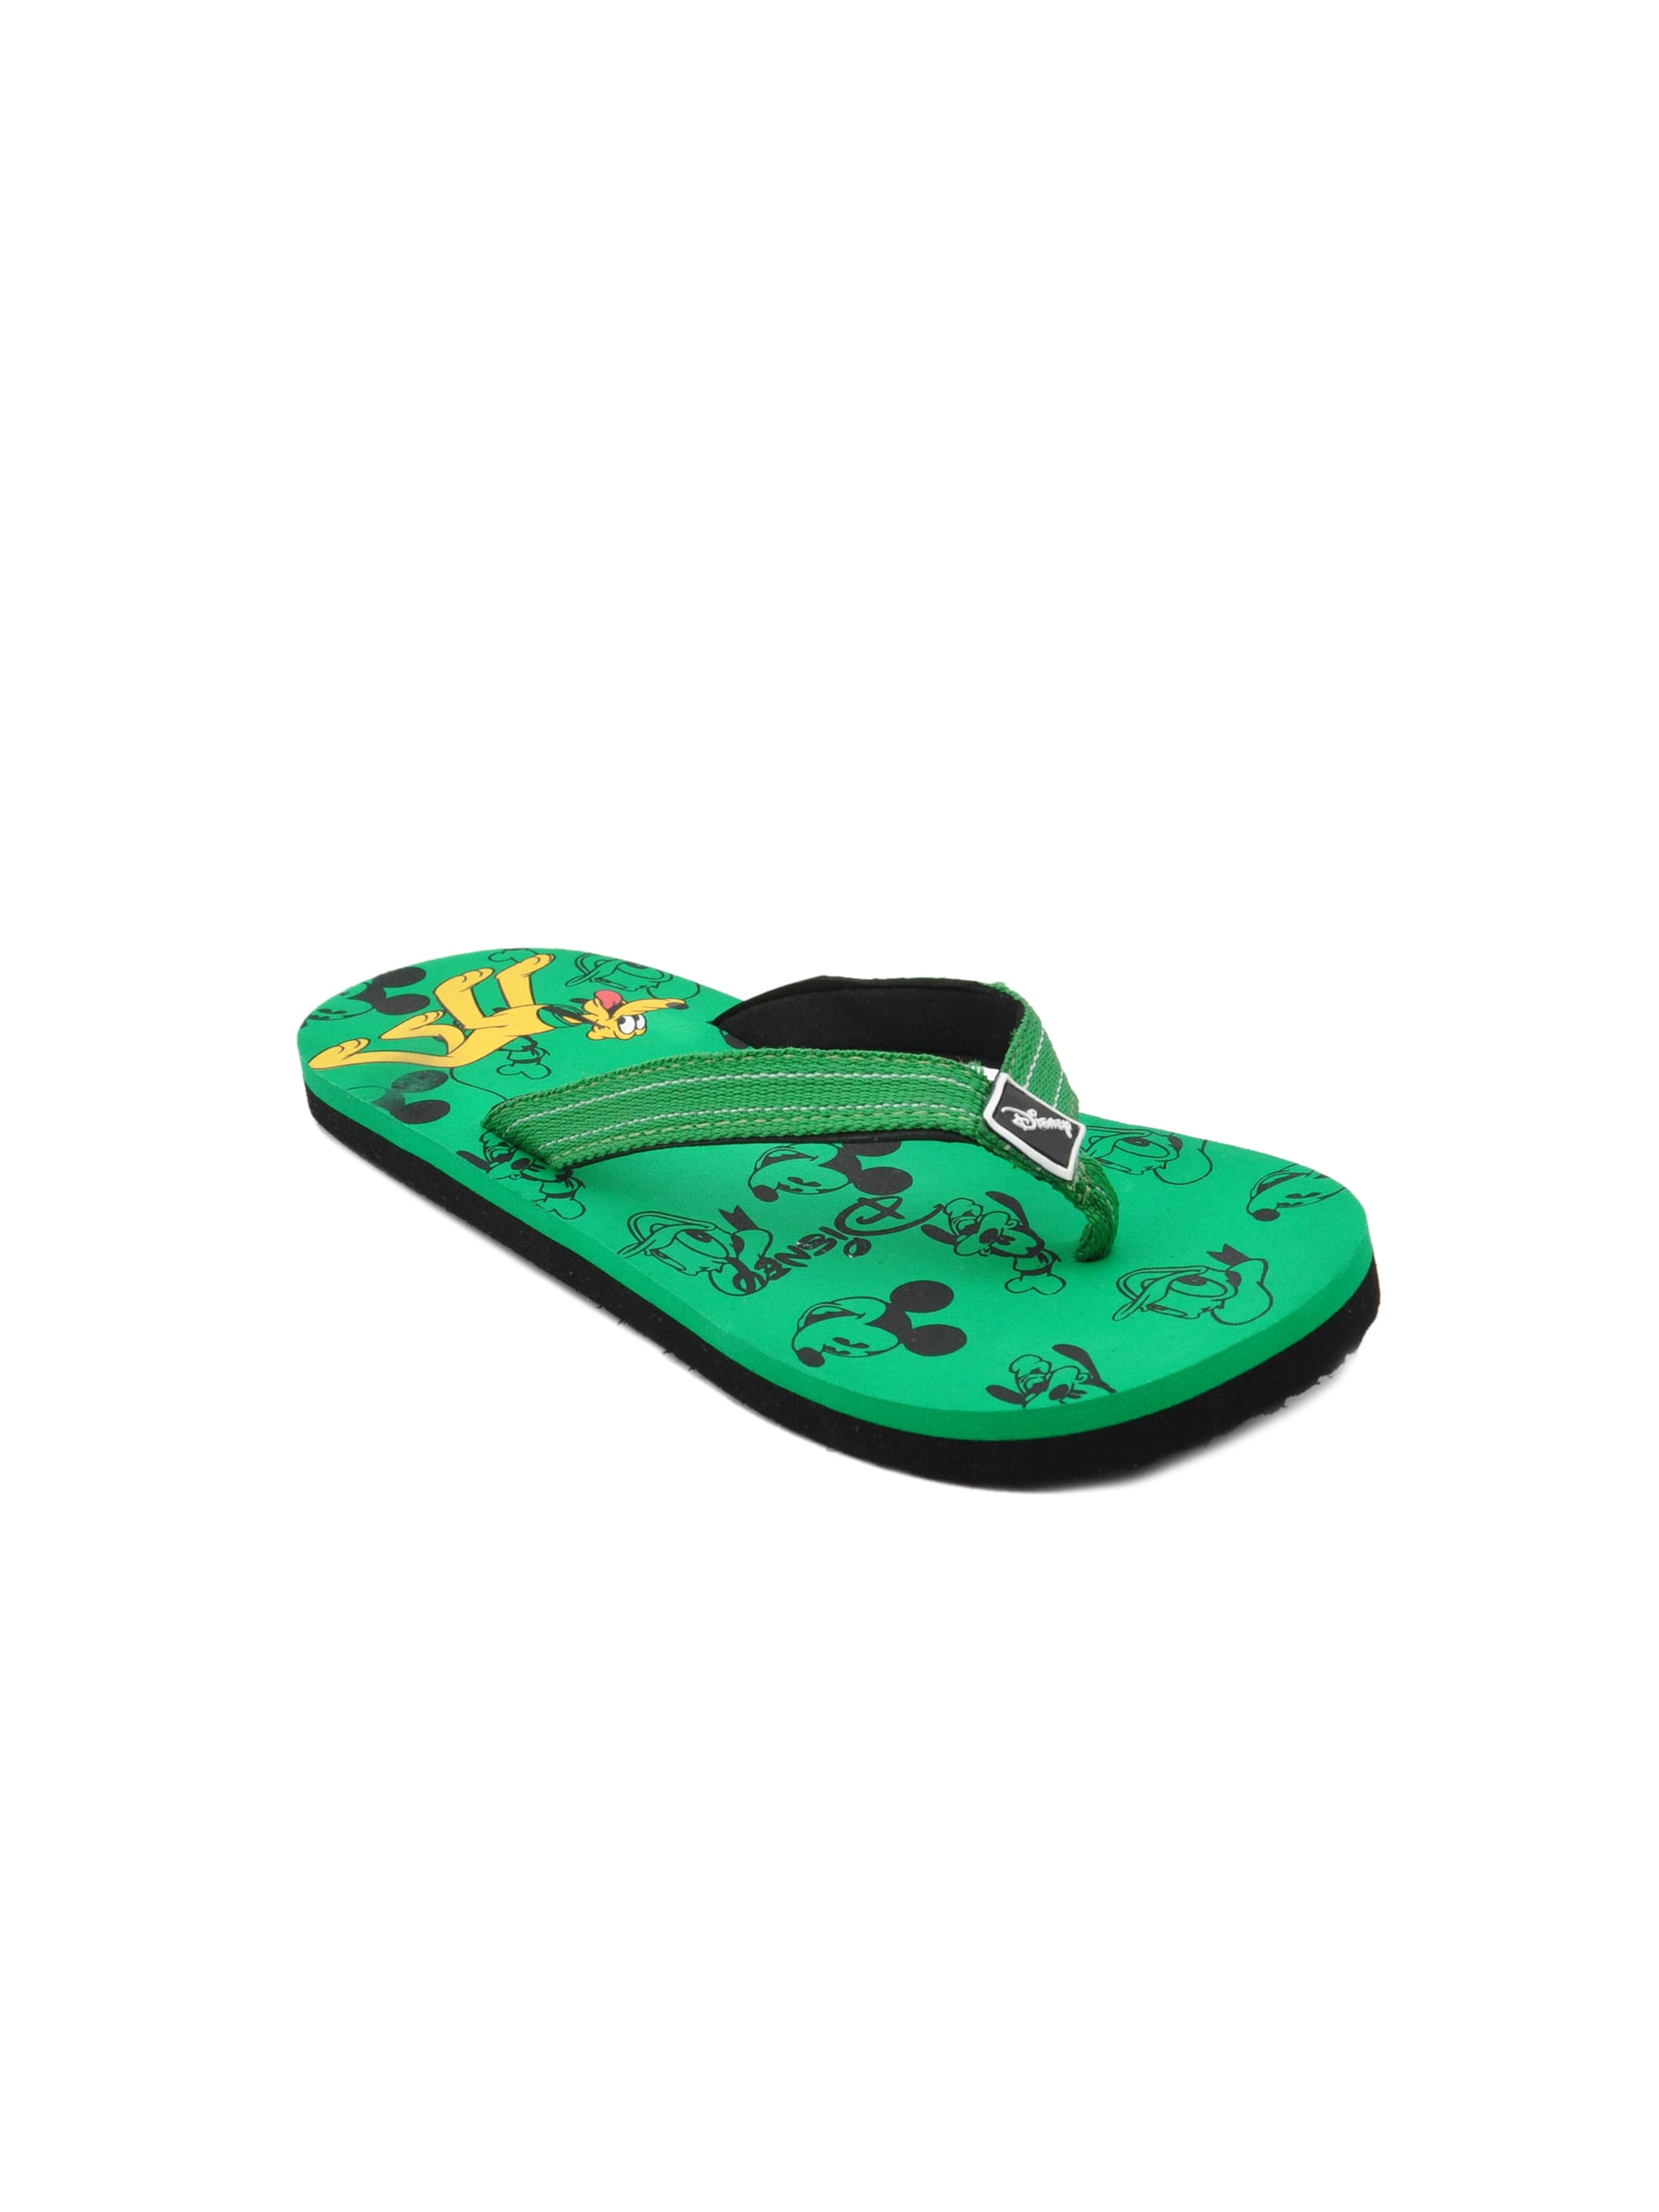 Disney Unisex Kids Pluto Green Flip Flops